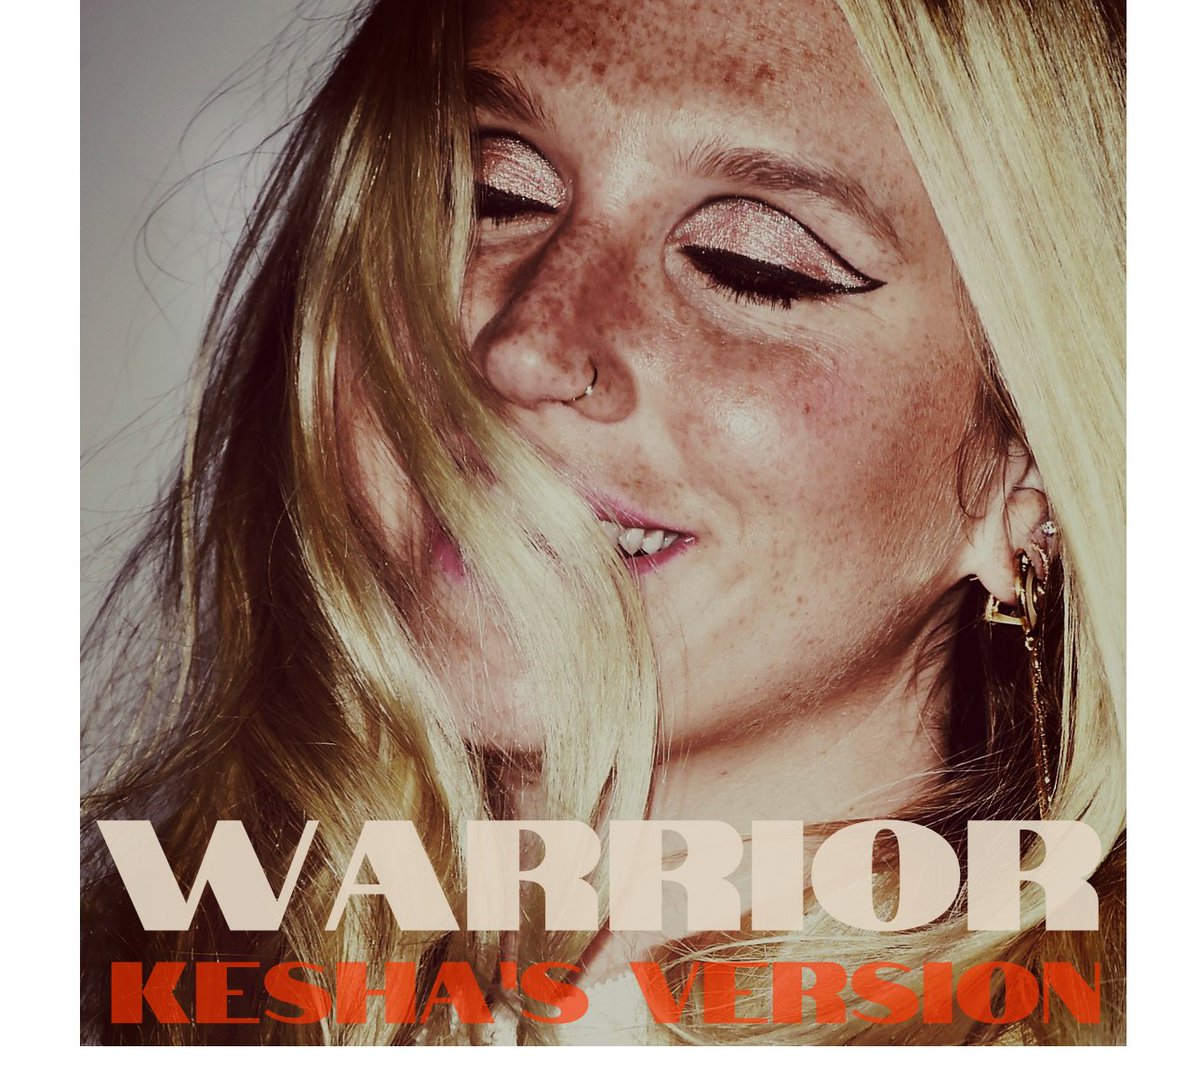 my version of the album cover of @KeshaRose's Warrior re-recording: Warrior (Kesha's Version)

#Kesha #Warrior #freedkesha